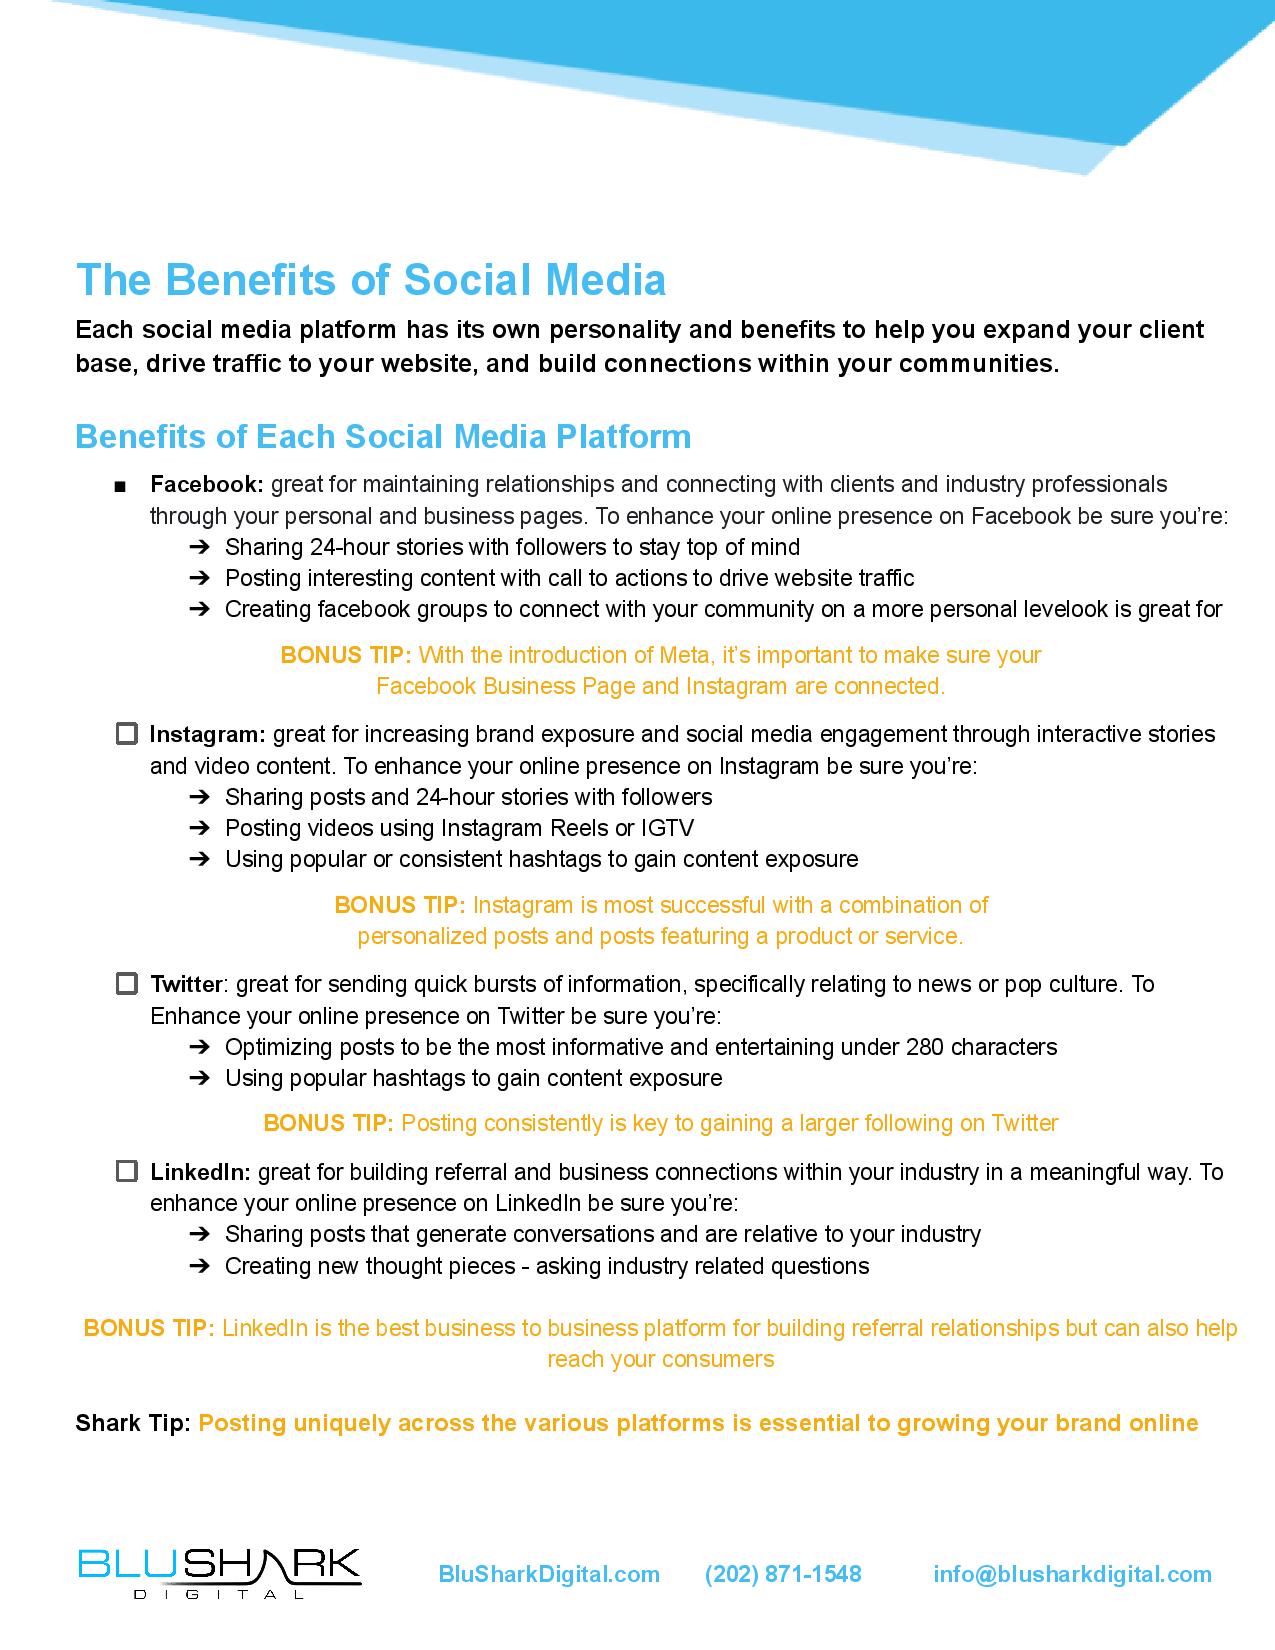 The Benefits of Social Media